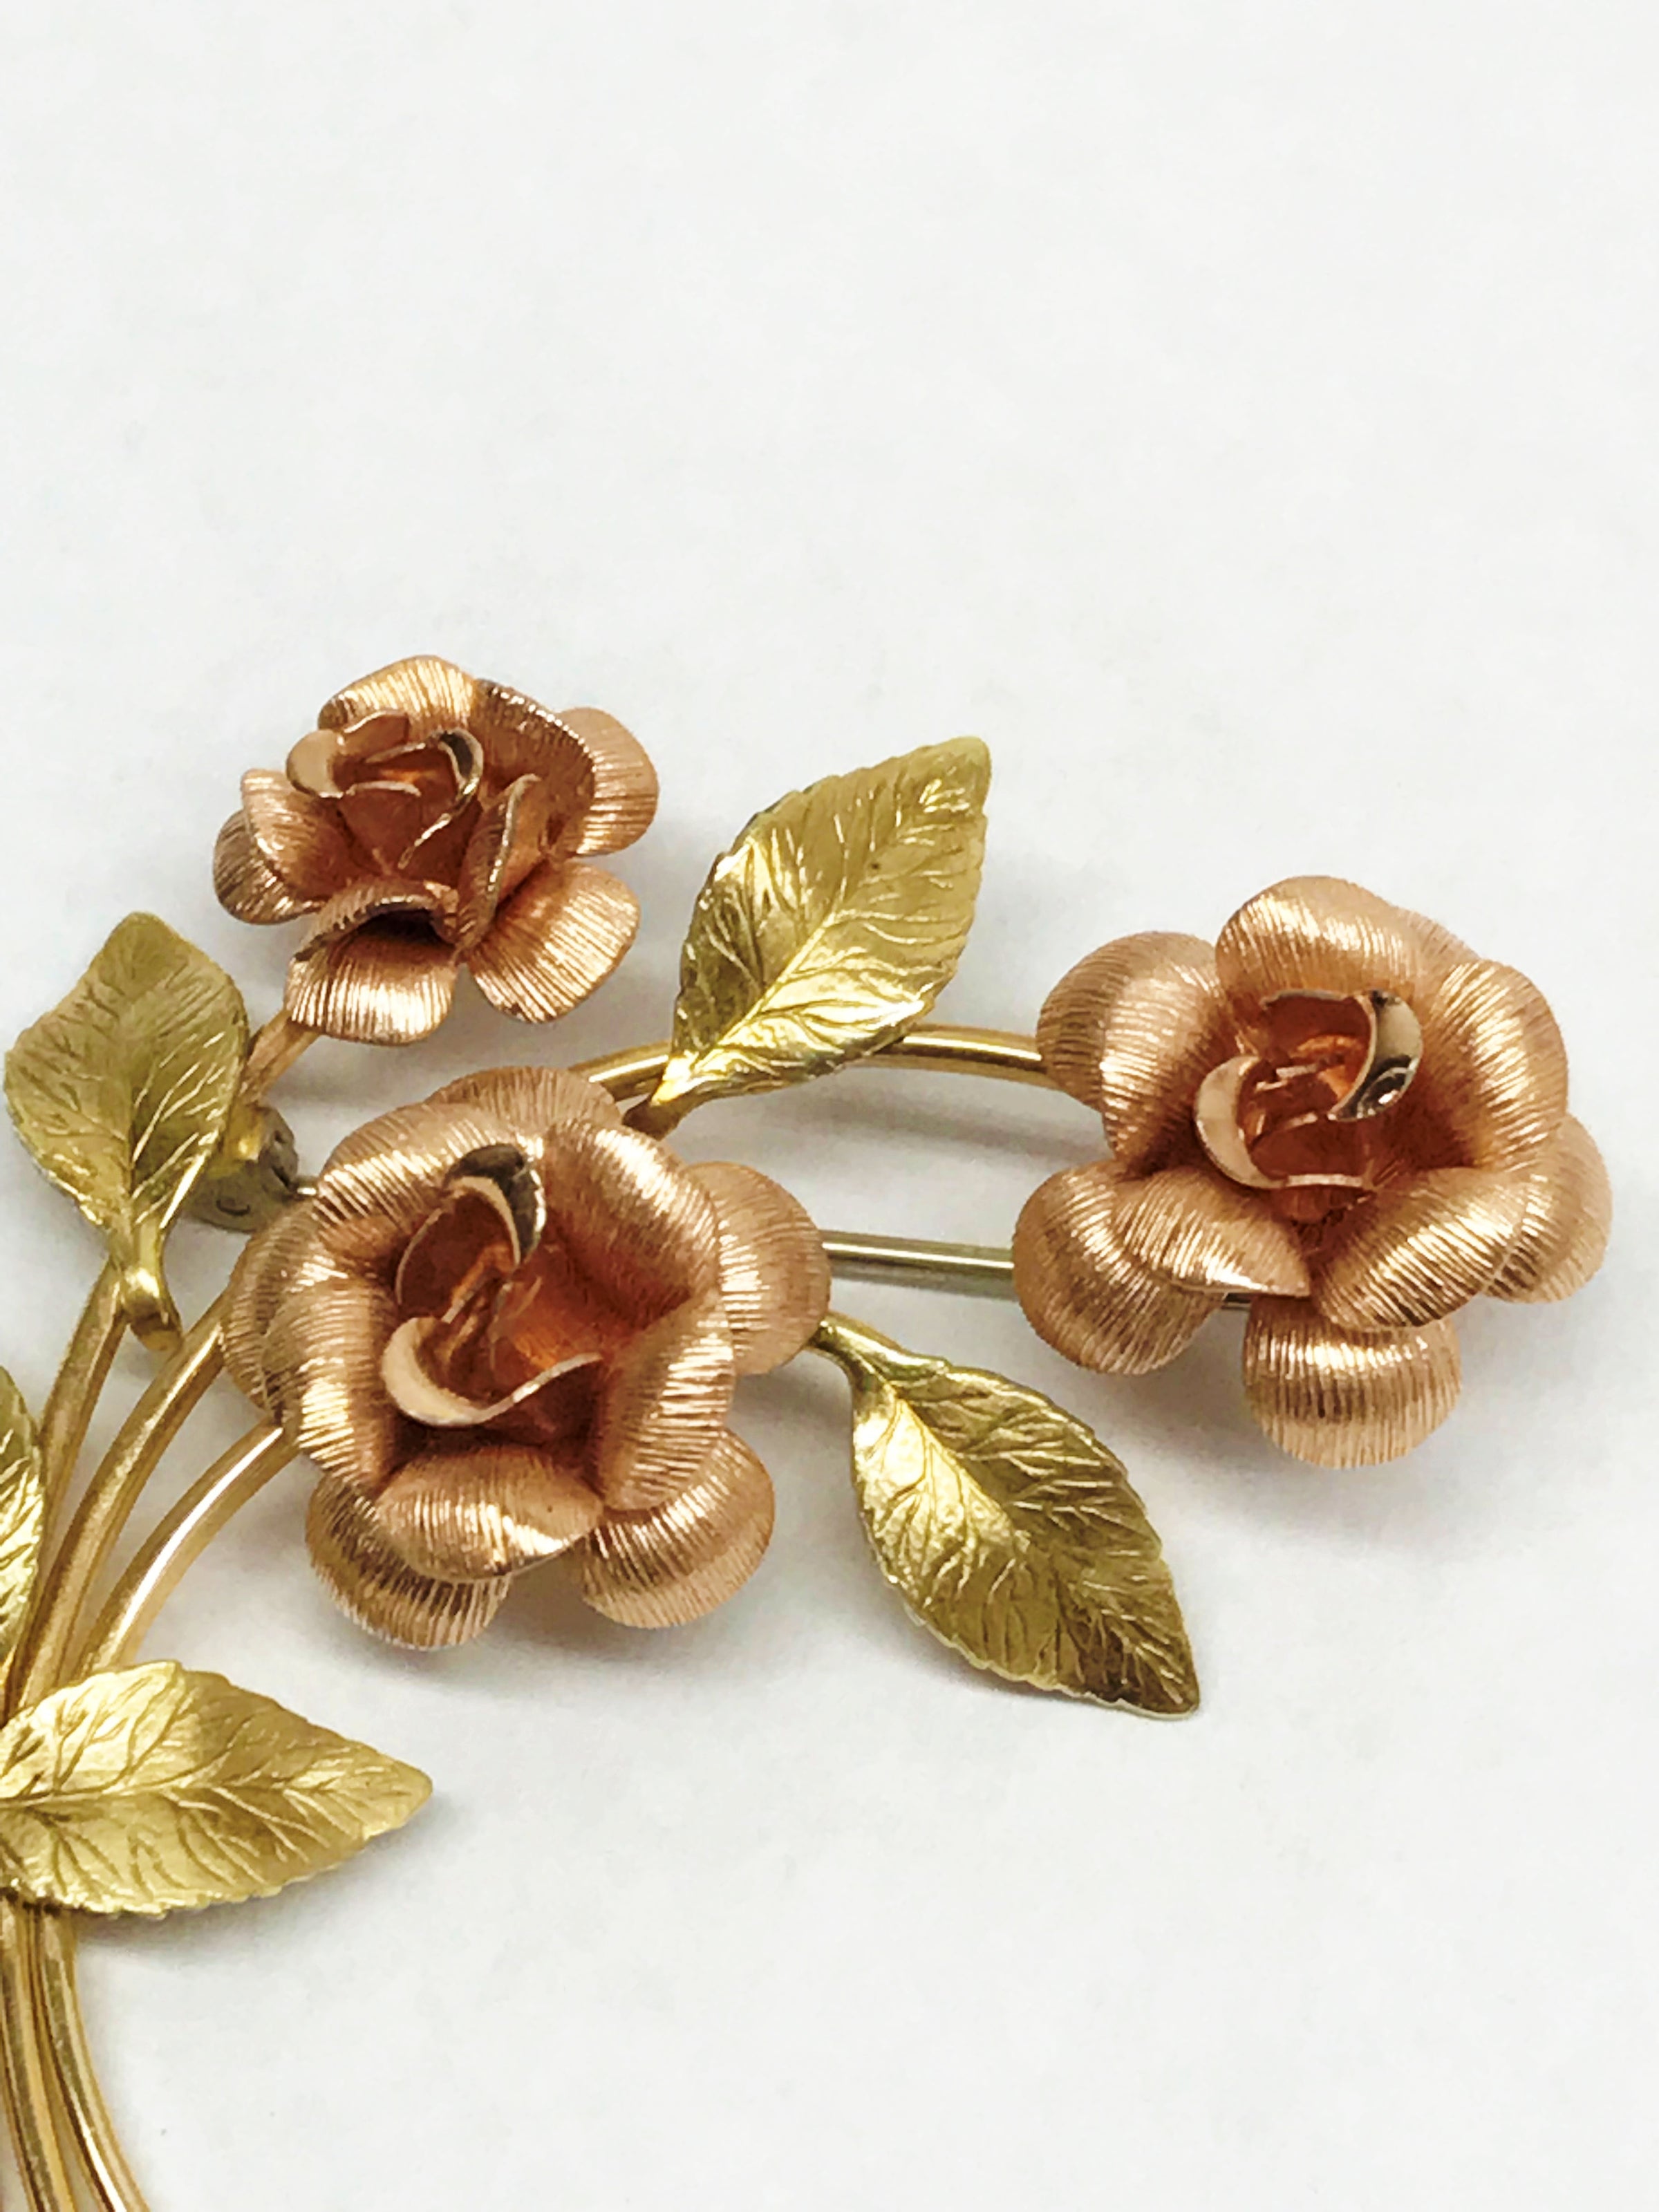 Rose Gold Tone Rhinestone Flower Embellishment or Brooch